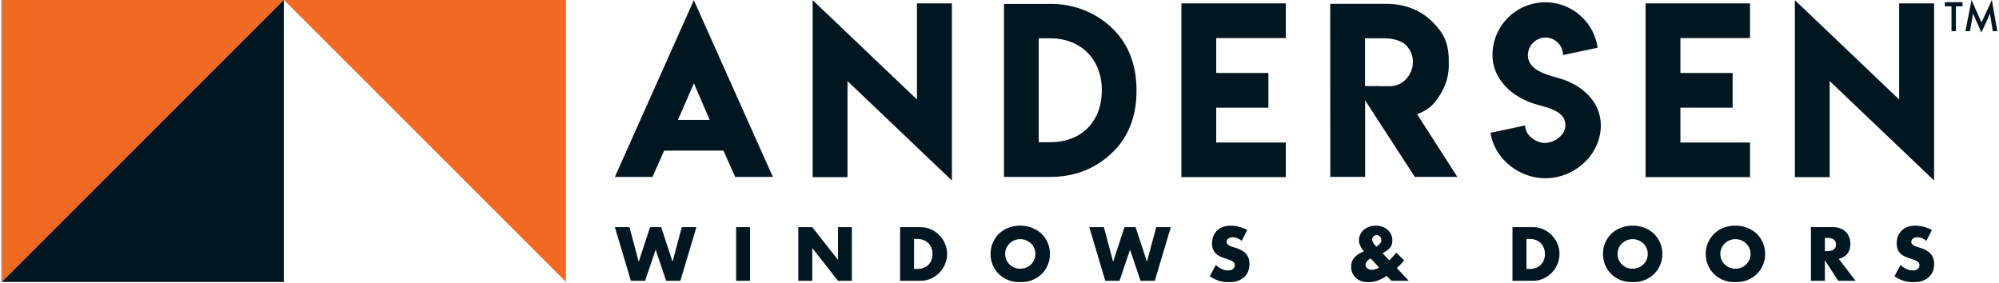 logo for Andersen Corporation